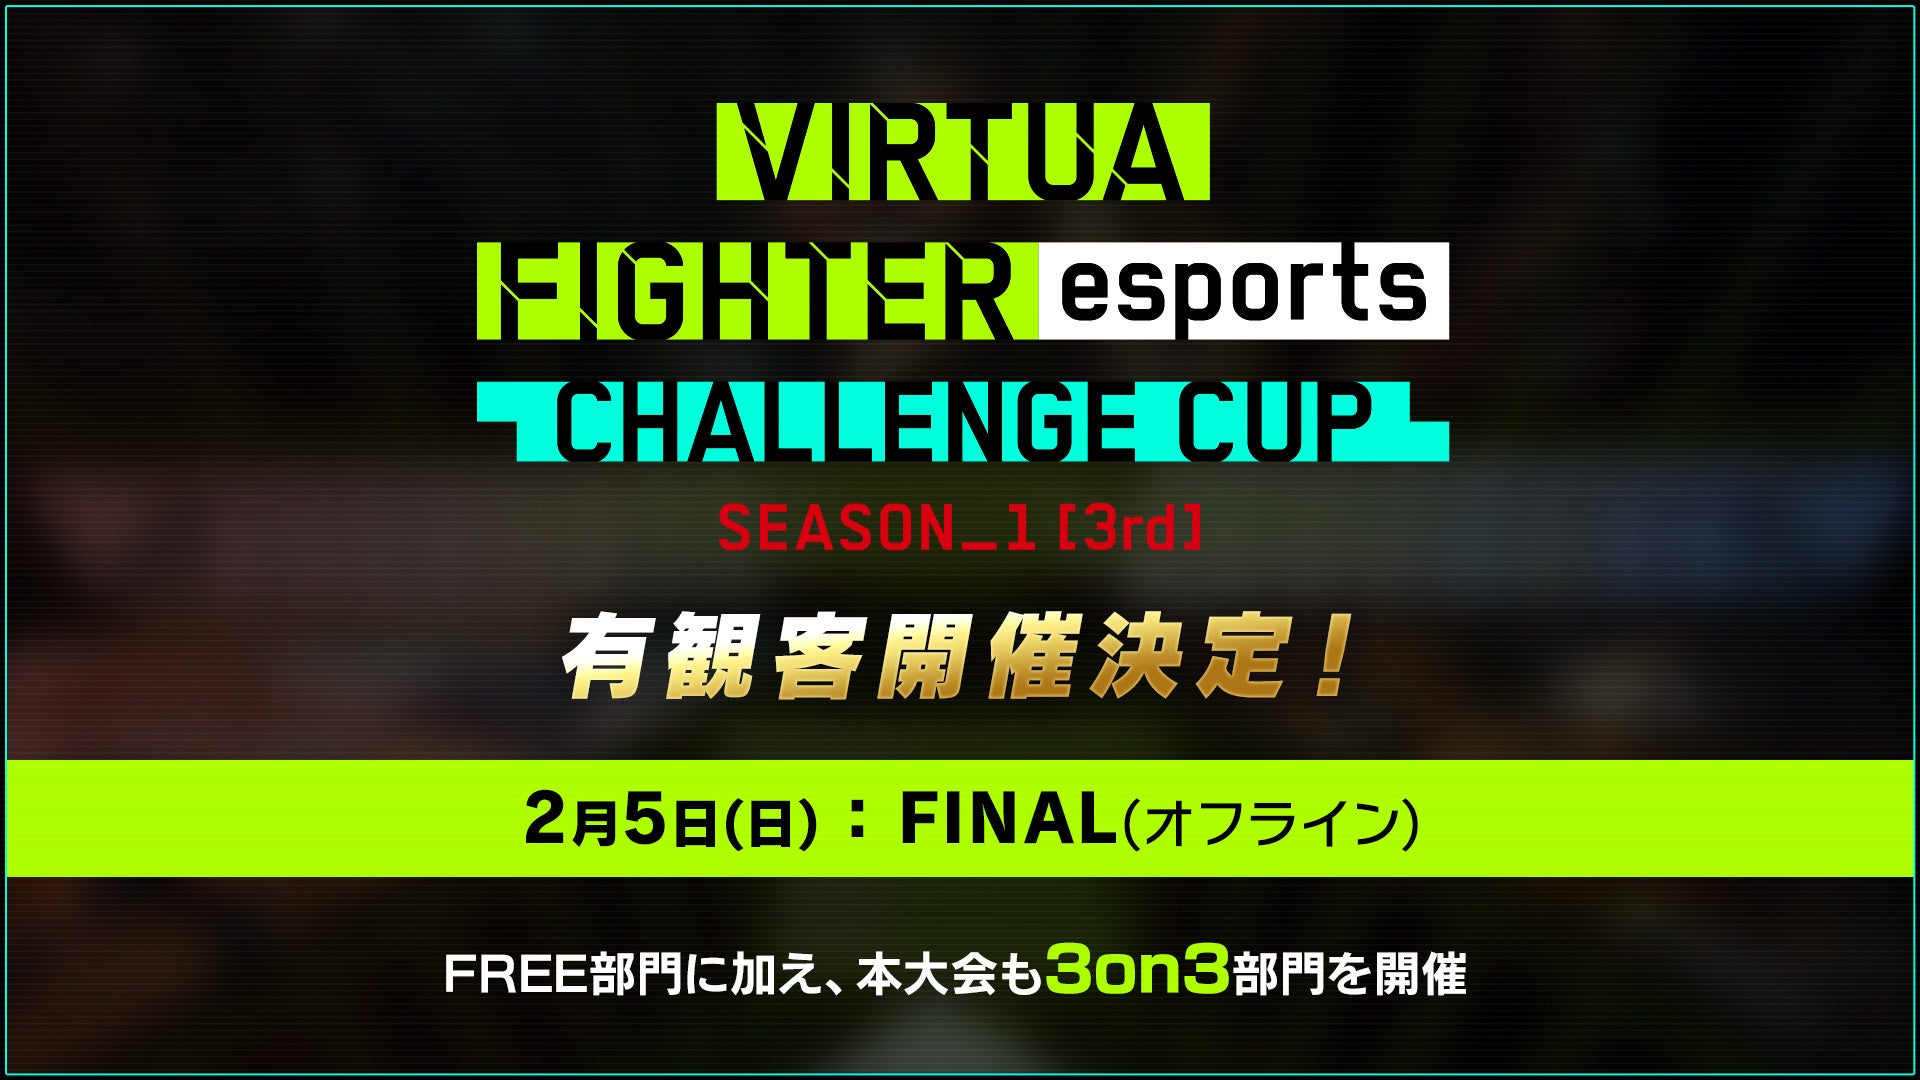 「VIRTUA FIGHTER esports CHALLENGE CUP SEASON_1【3rd】FREE FINAL／3on3 FINAL」2月5日（日）「浅草橋ヒューリックホール」にて開催